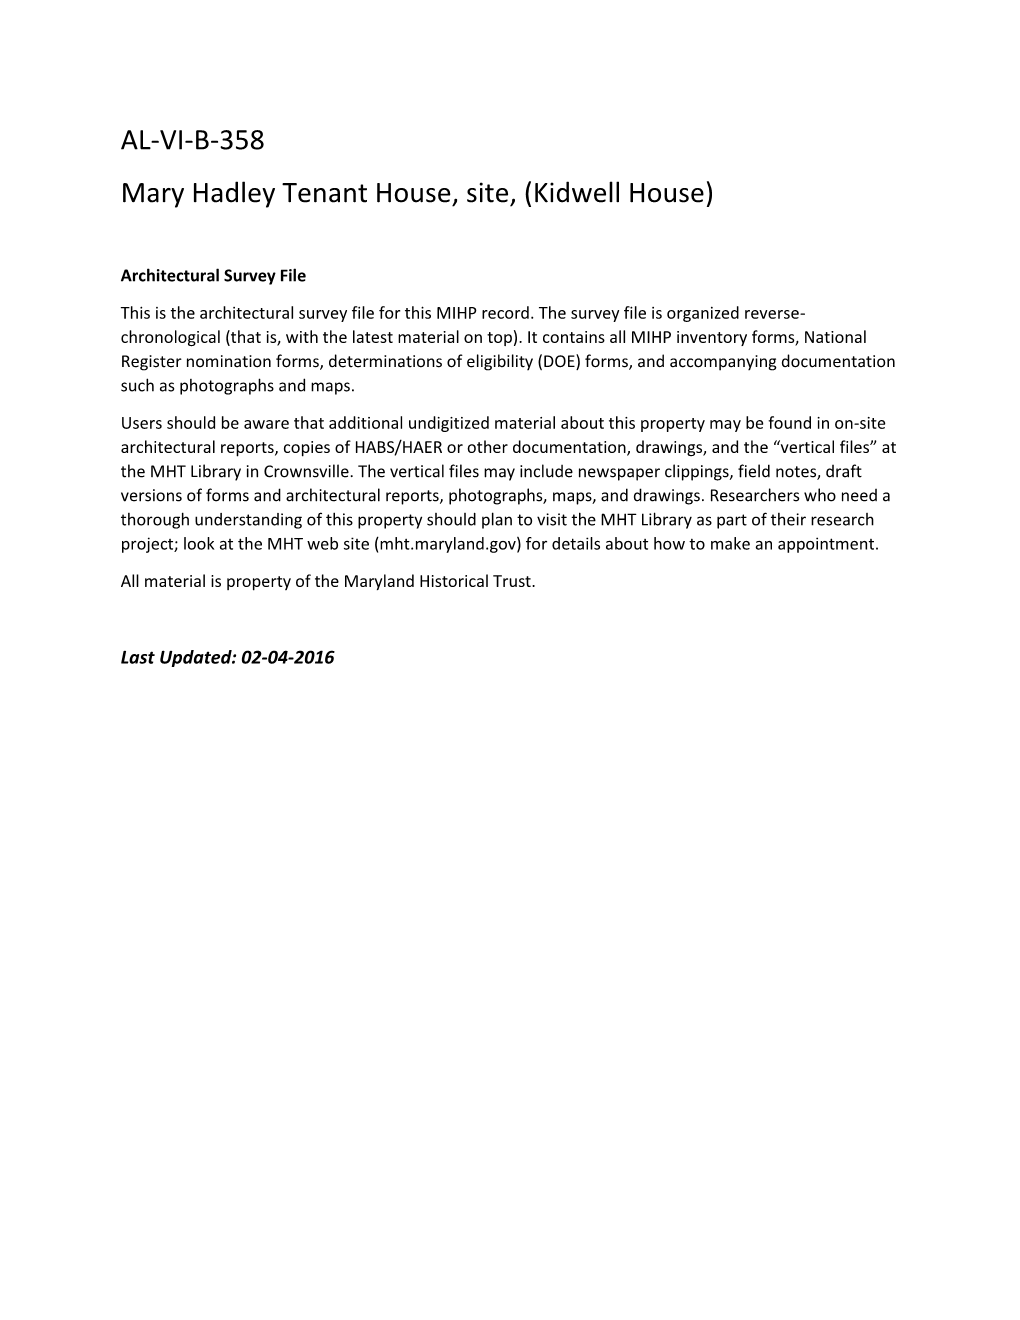 AL-VI-B-358 Mary Hadley Tenant House, Site, (Kidwell House)